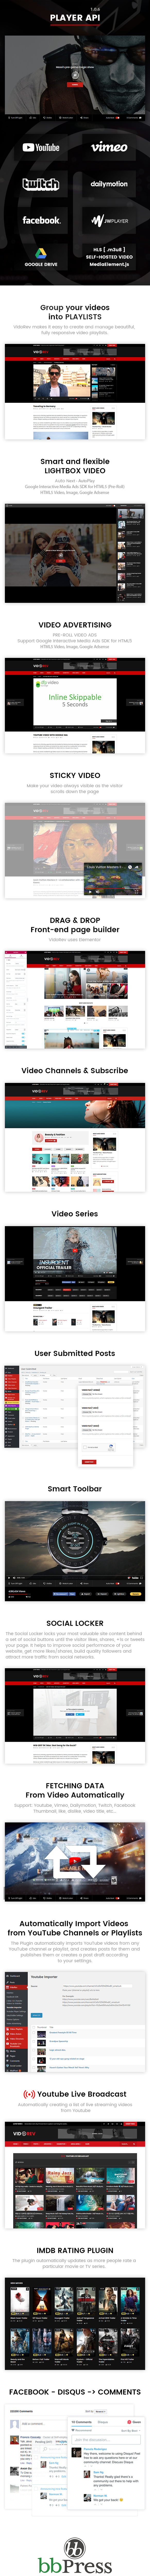 VidoRev - Video WordPress Theme - 14